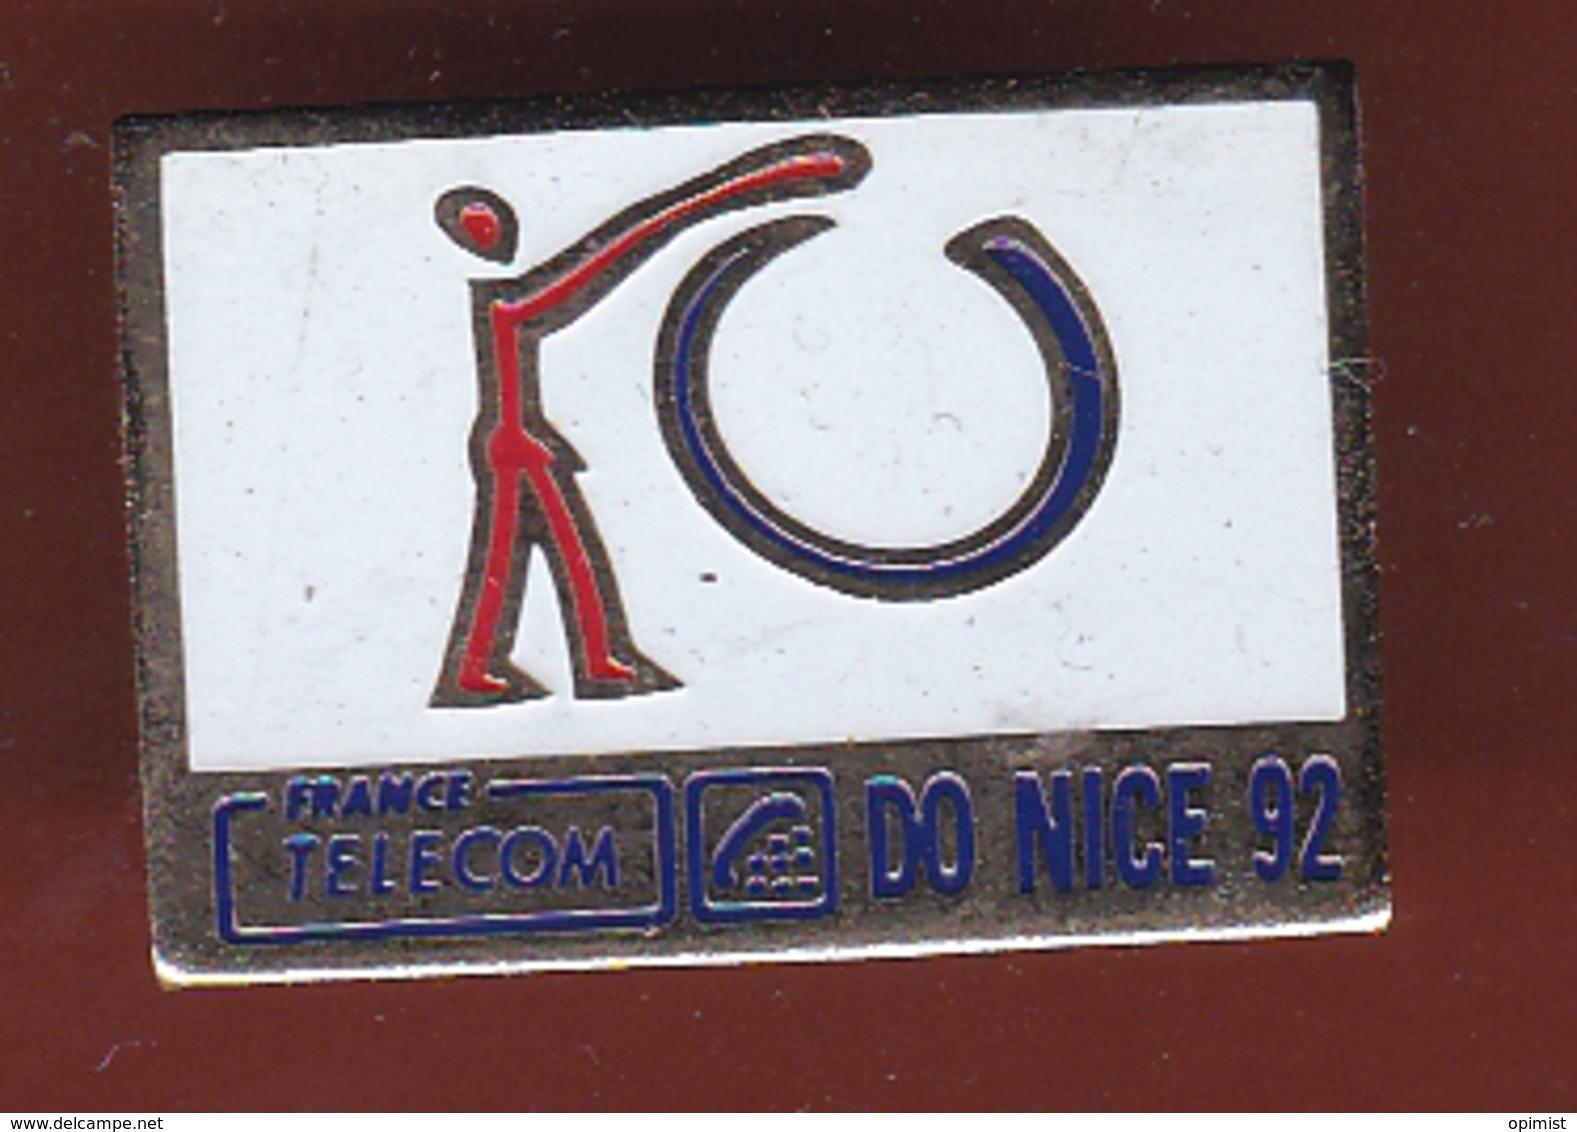 59599- Pin's.France Telecom.Orange.Nice.. - France Telecom